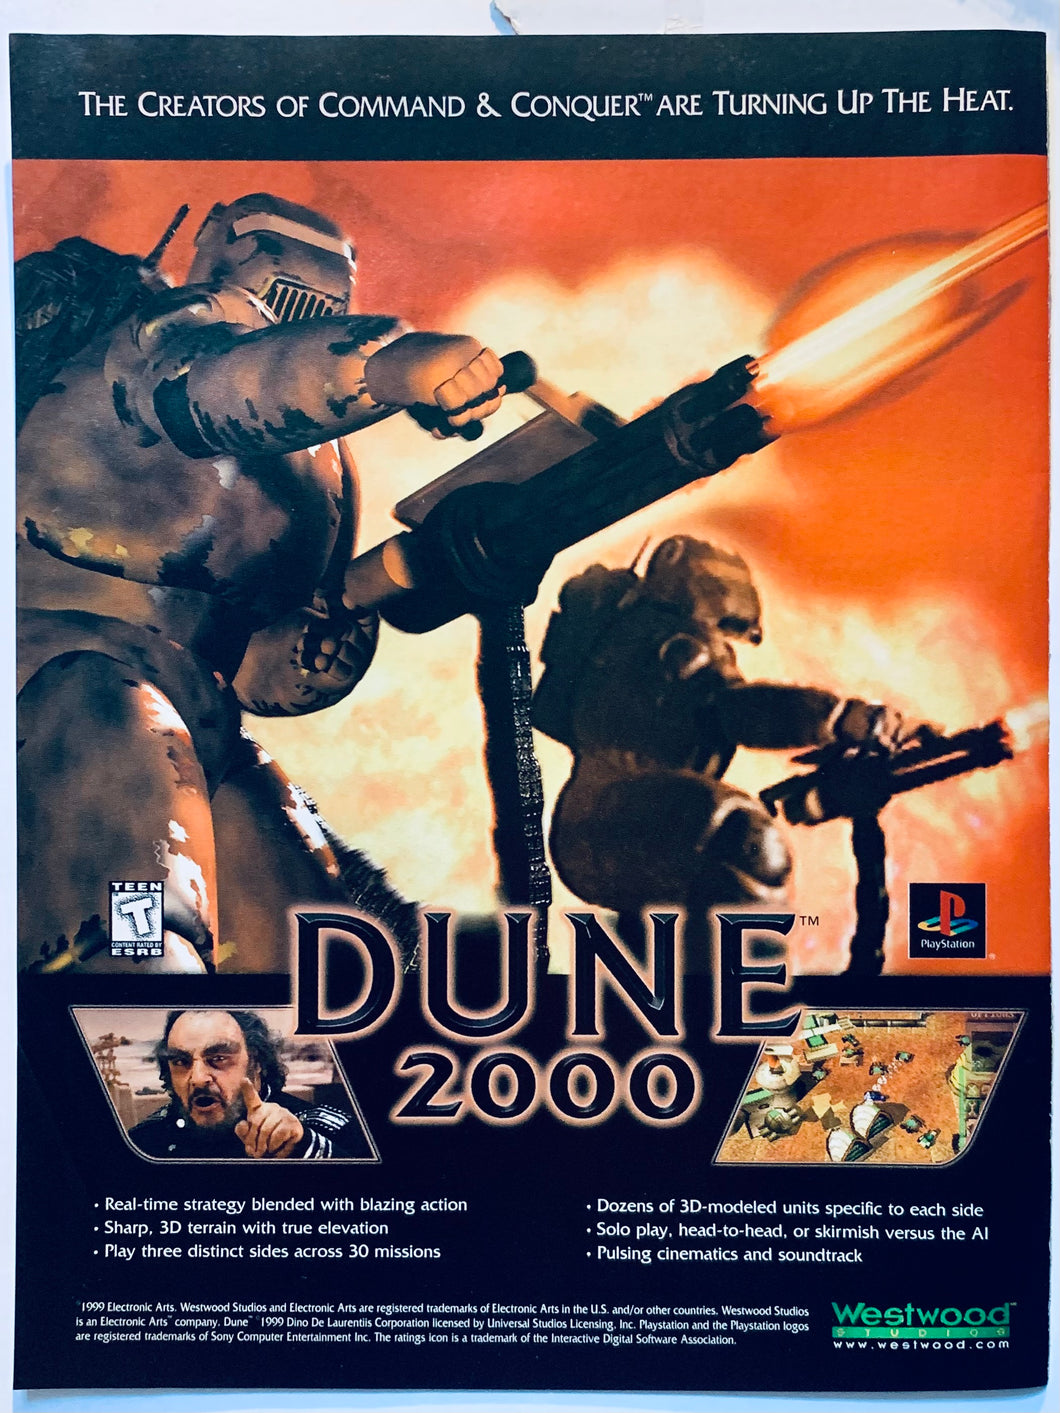 Dune 2000 - PlayStation - Original Vintage Advertisement - Print Ads - Laminated A4 Poster